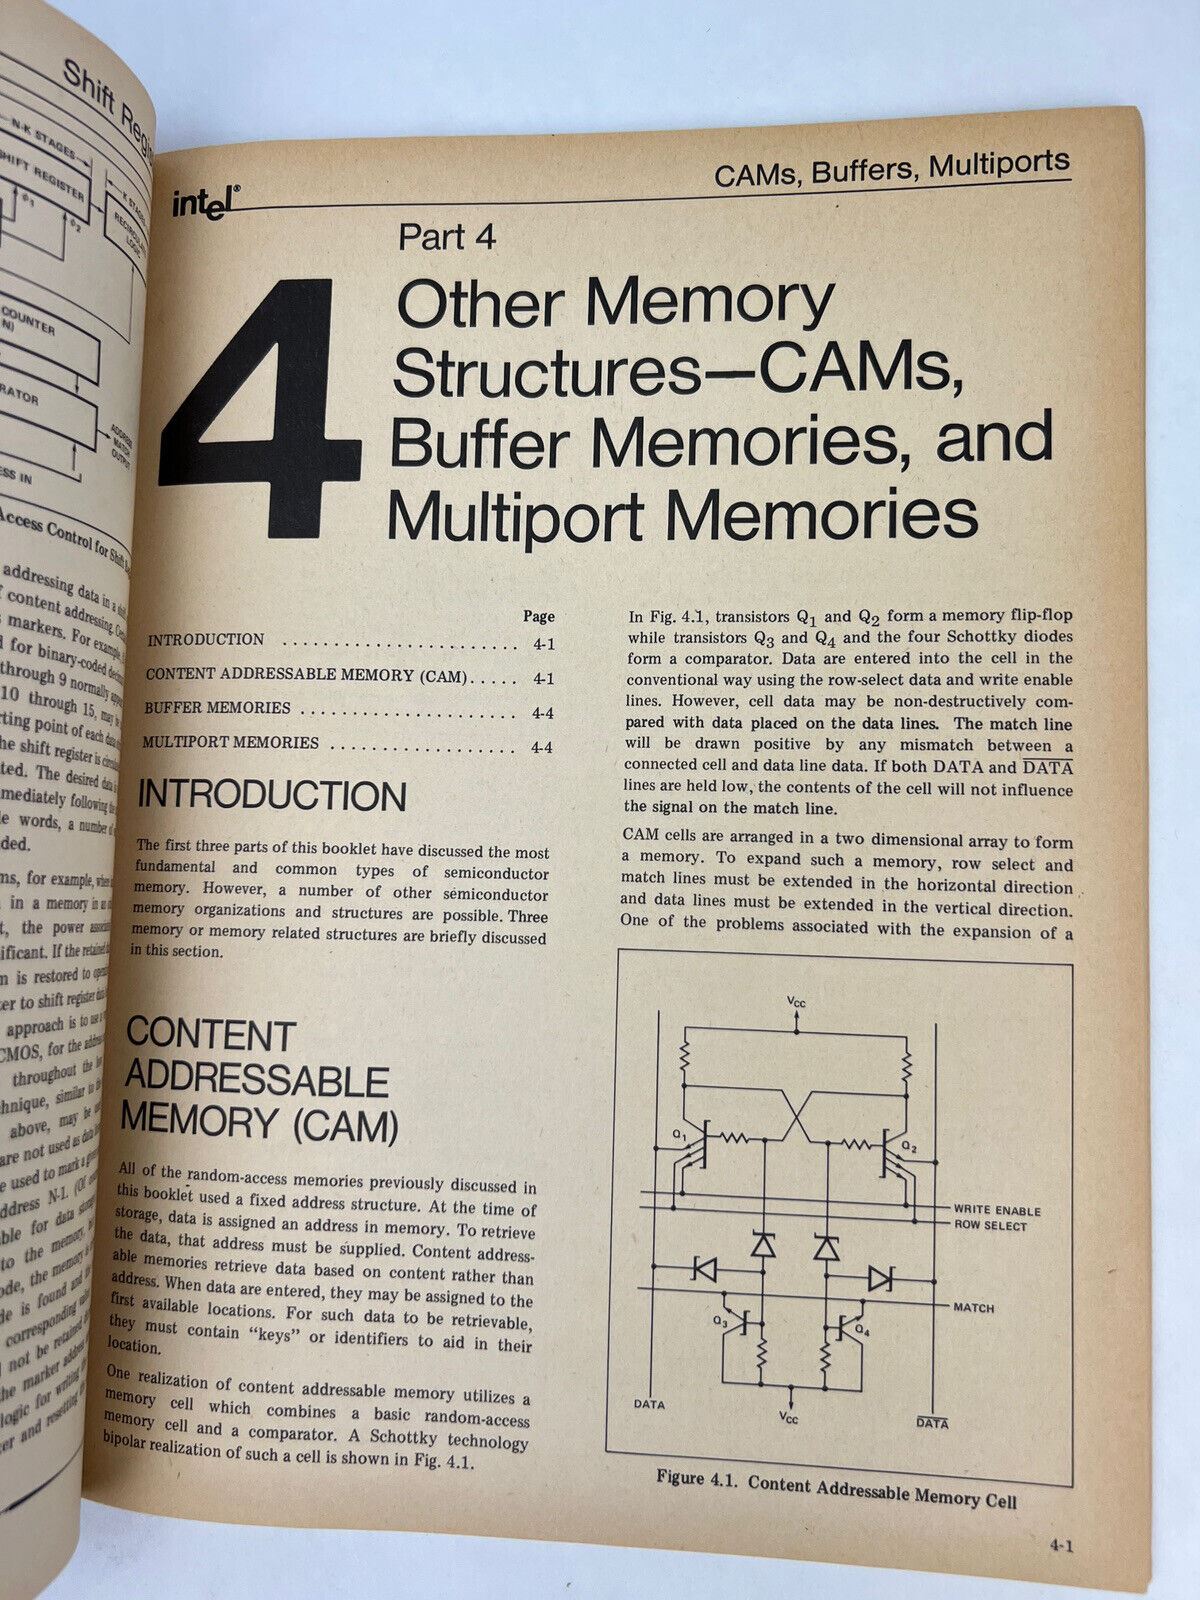 Vintage August 1973 INTEL MEMORY DESIGN HANDBOOK Early Computer History